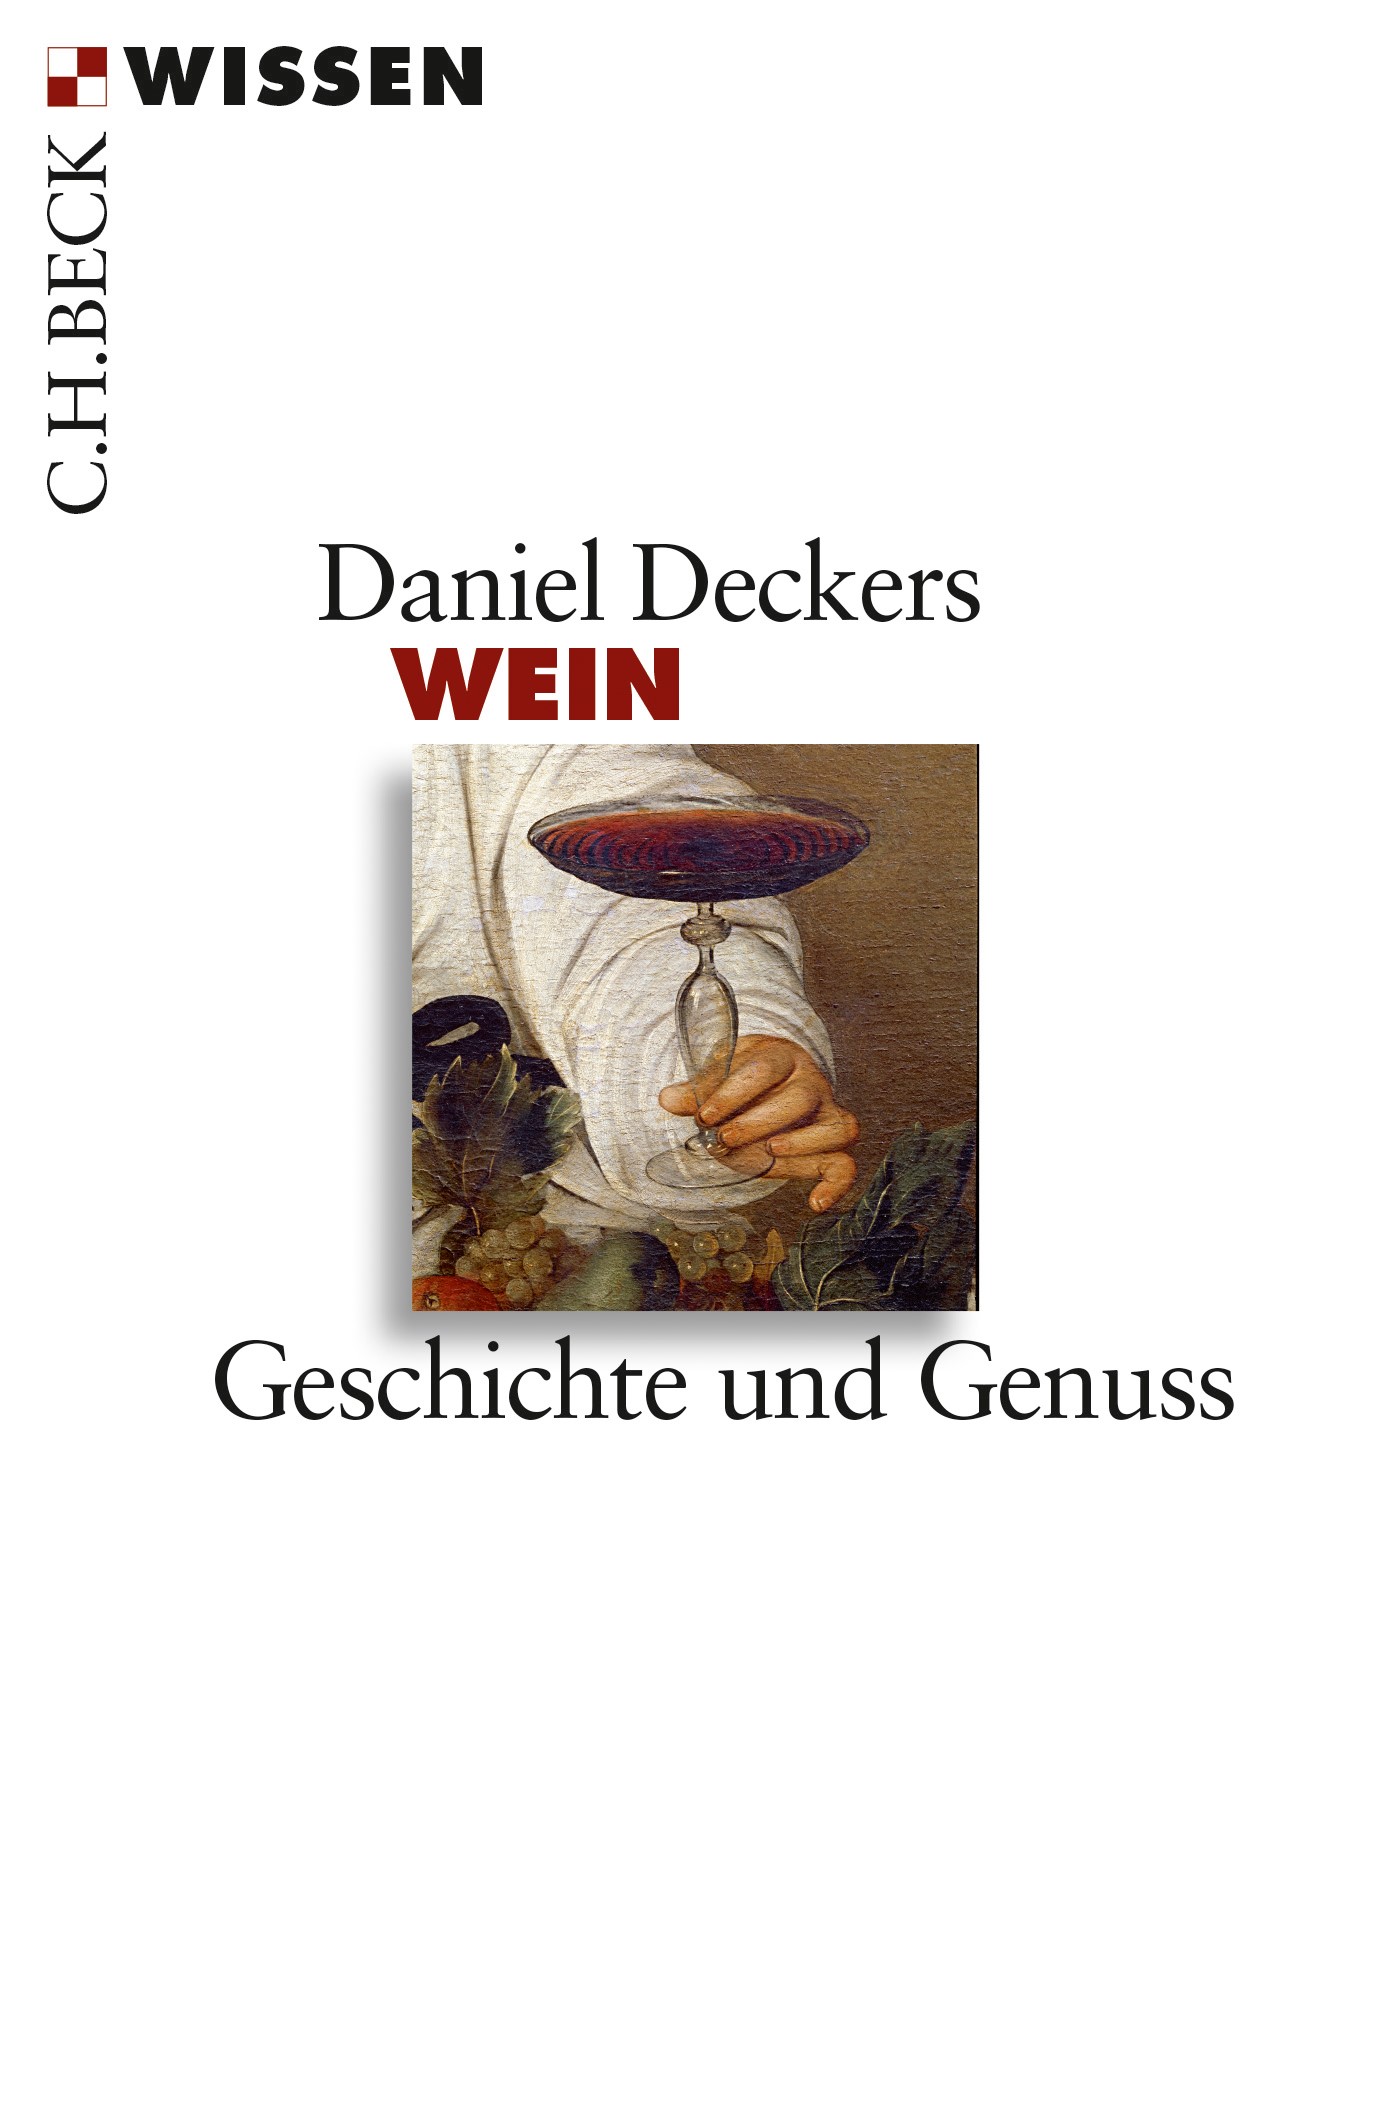 Cover: Deckers, Daniel, Wein